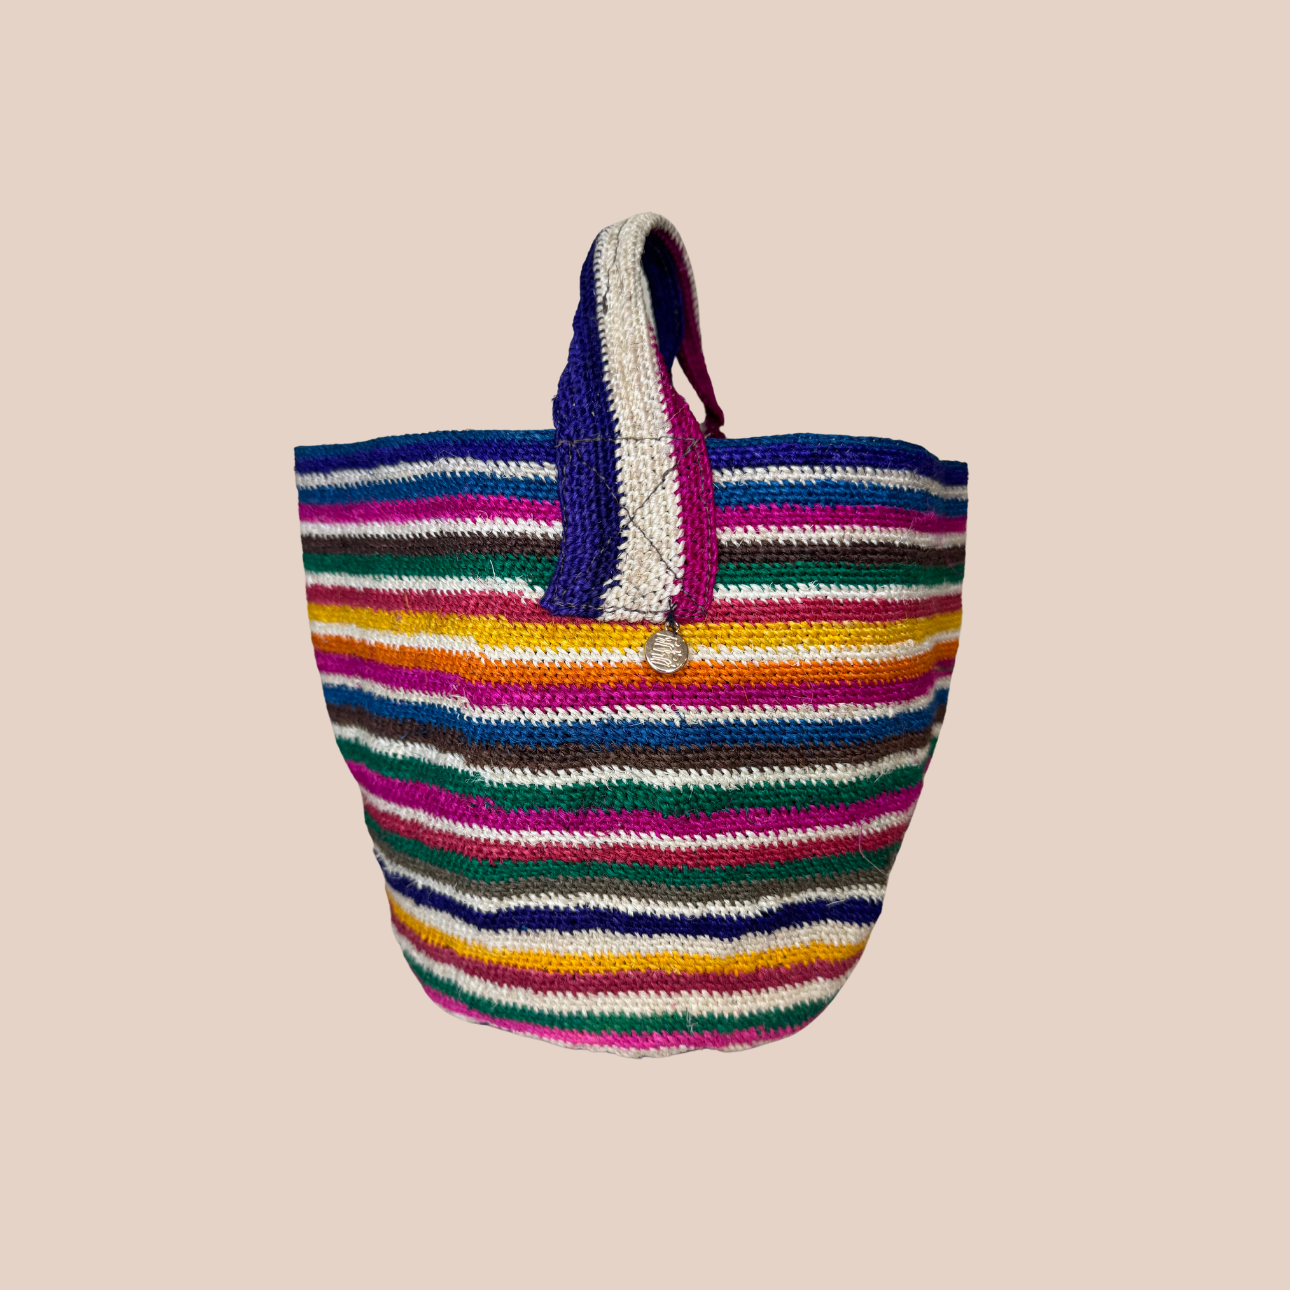 Image du sac Bahia de chez maison badigo, sac en fibres naturelle de cactus multicolore